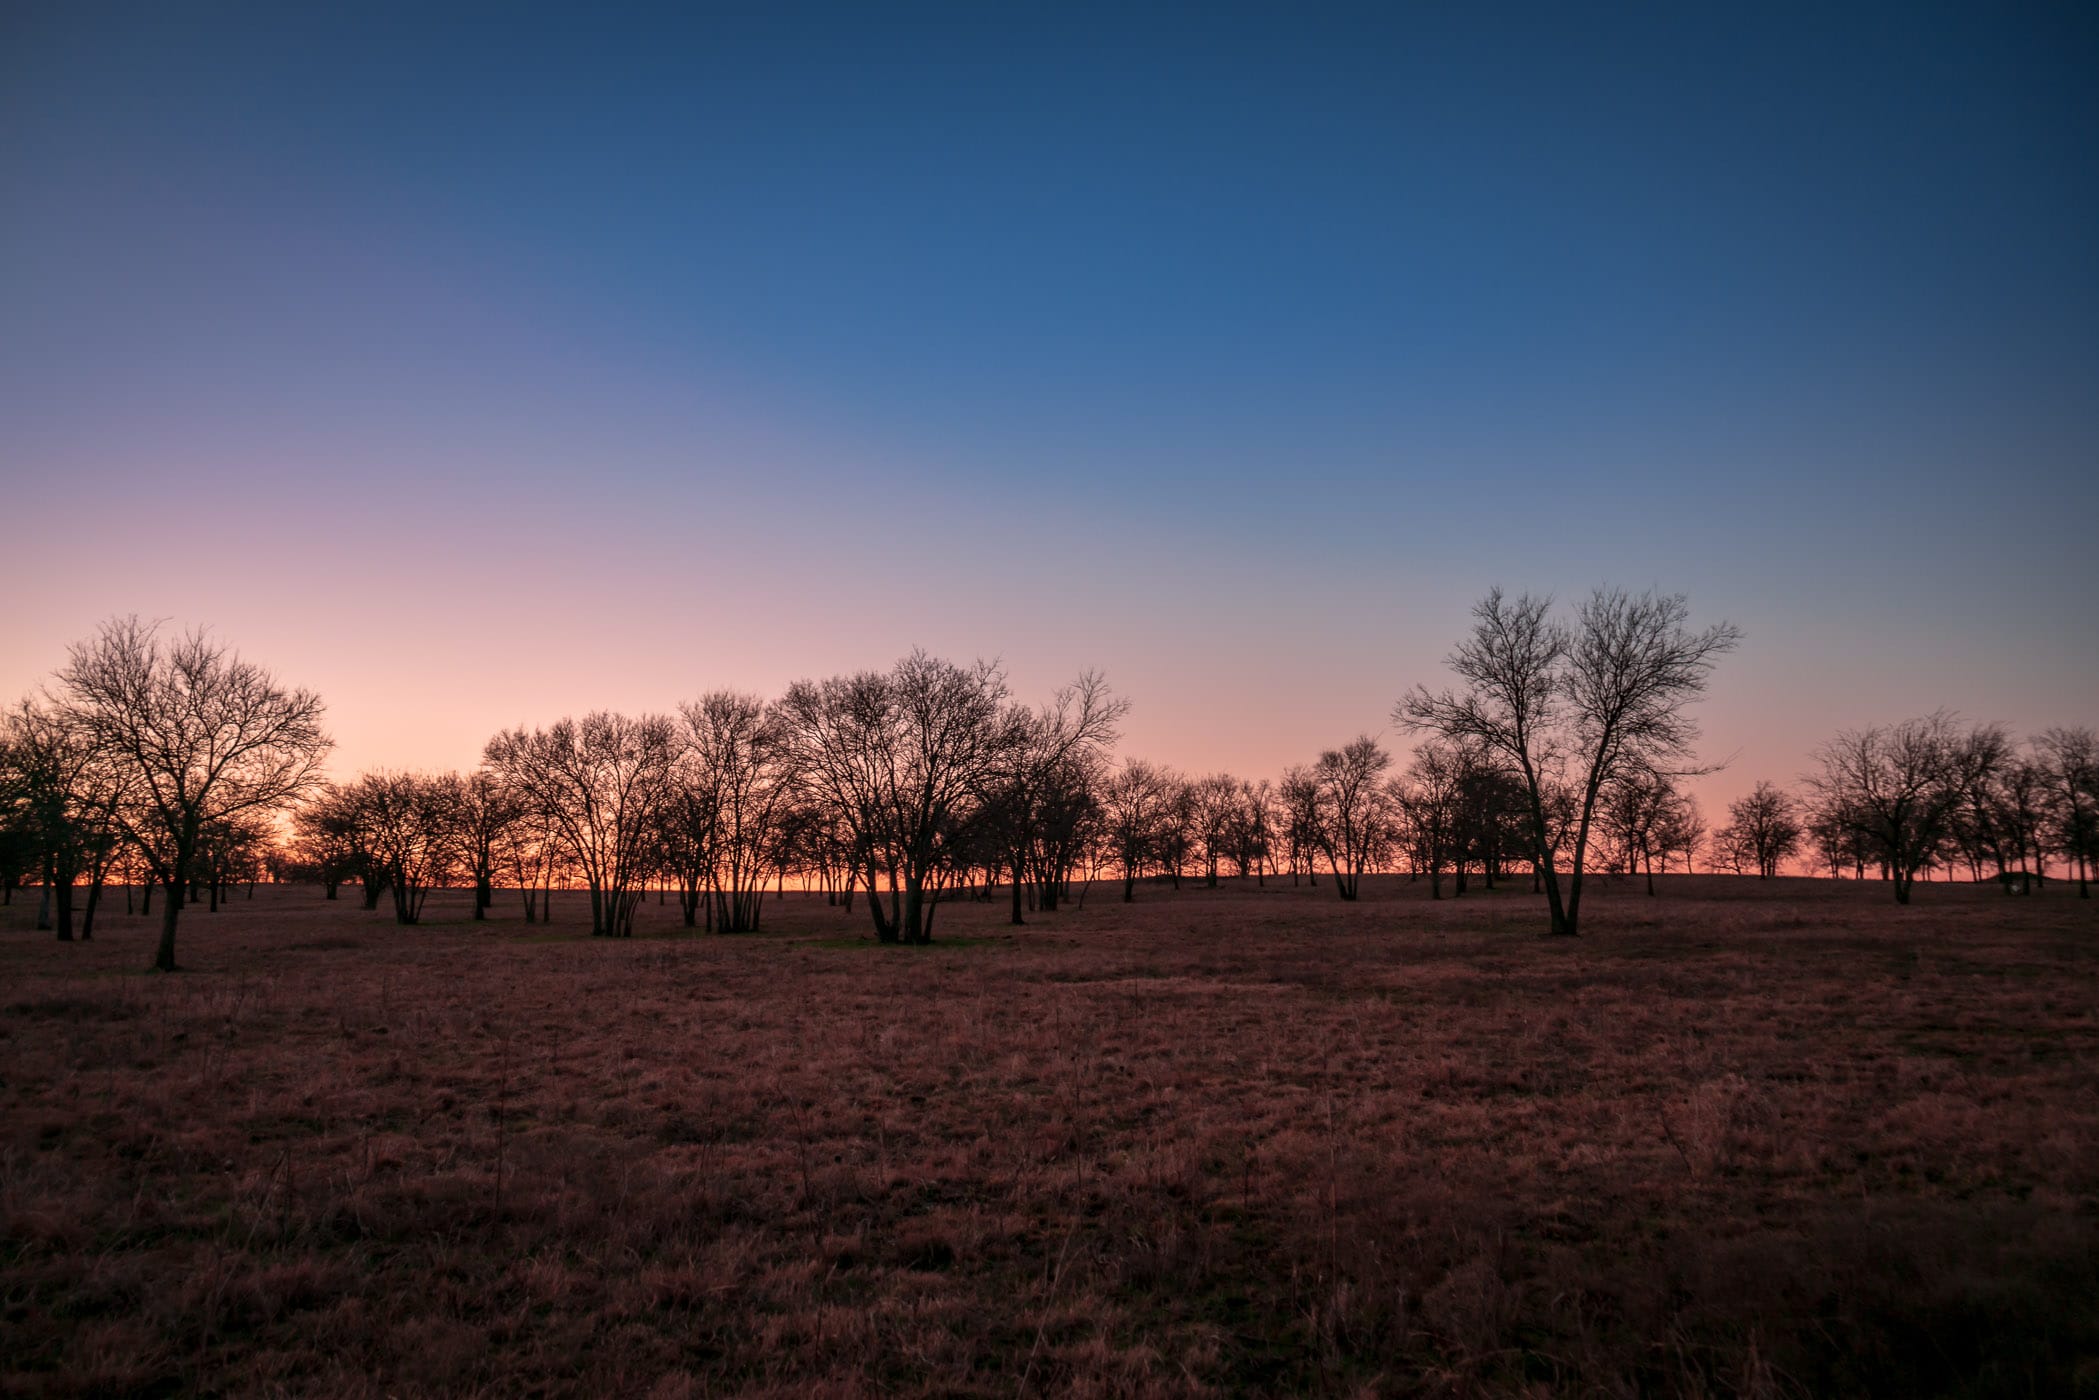 Trees in a field near Sherman, Texas, greet the dawn.